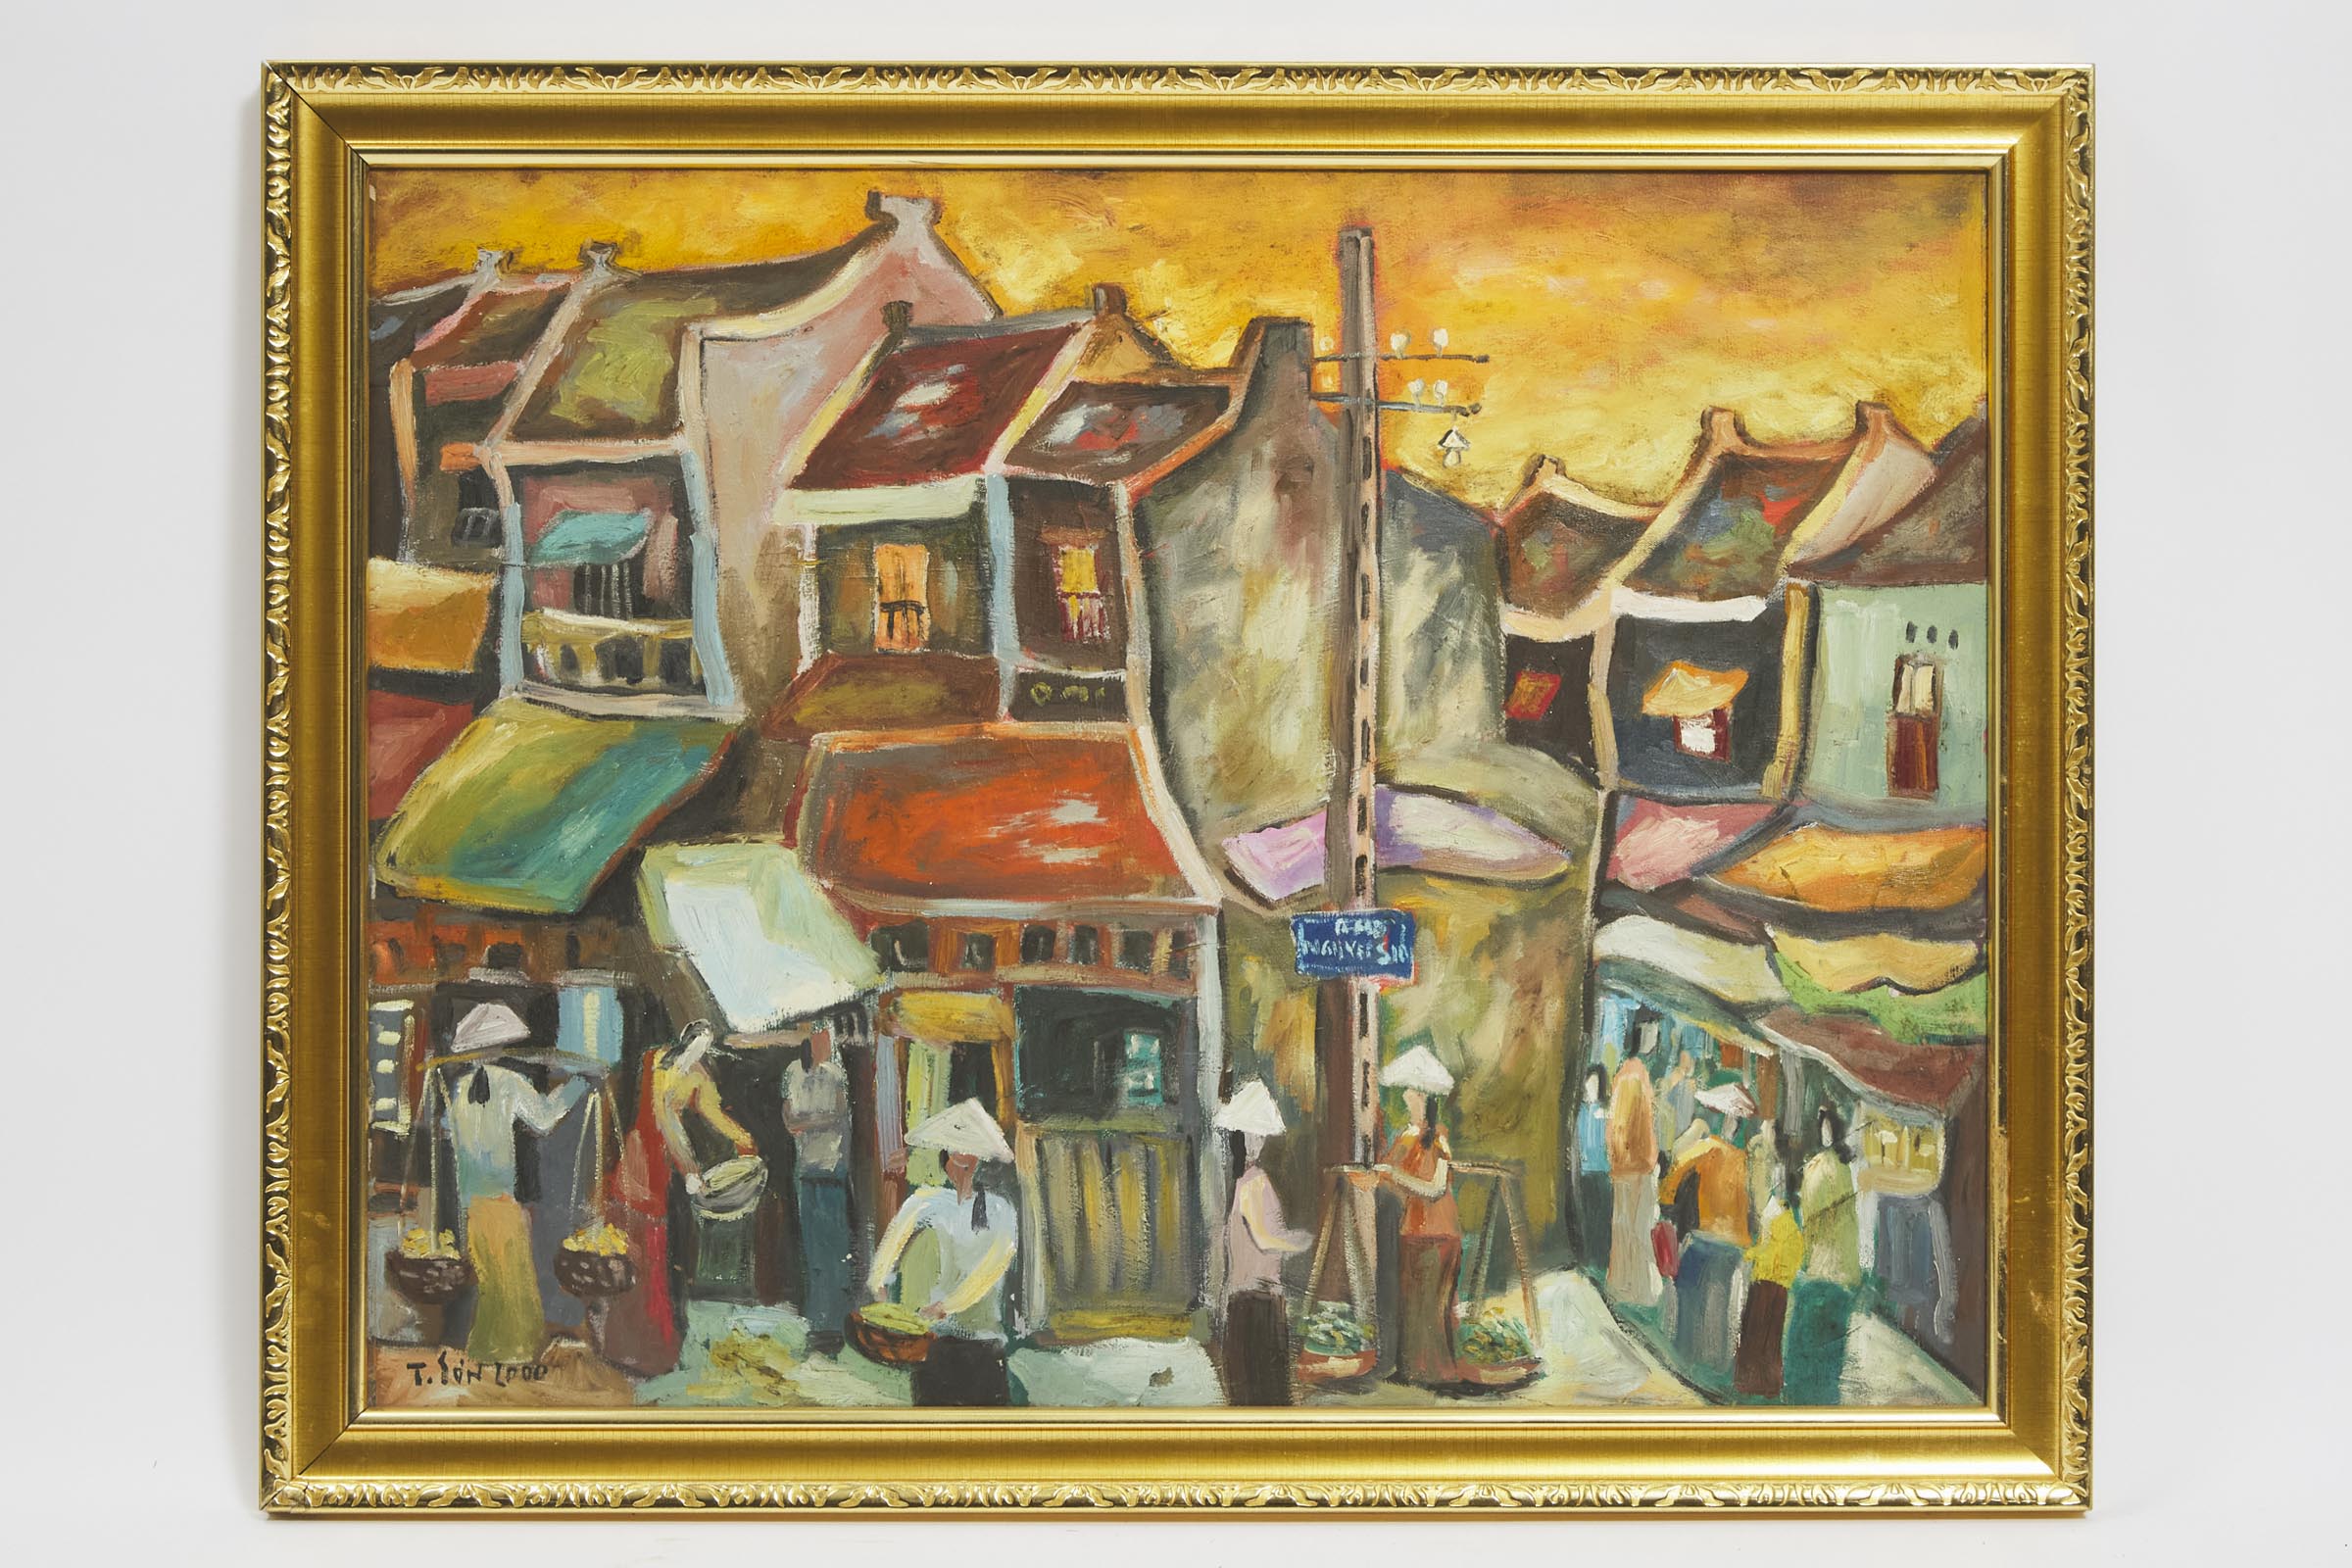 Le Thanh Son (Vietnamese, 1962-), Street